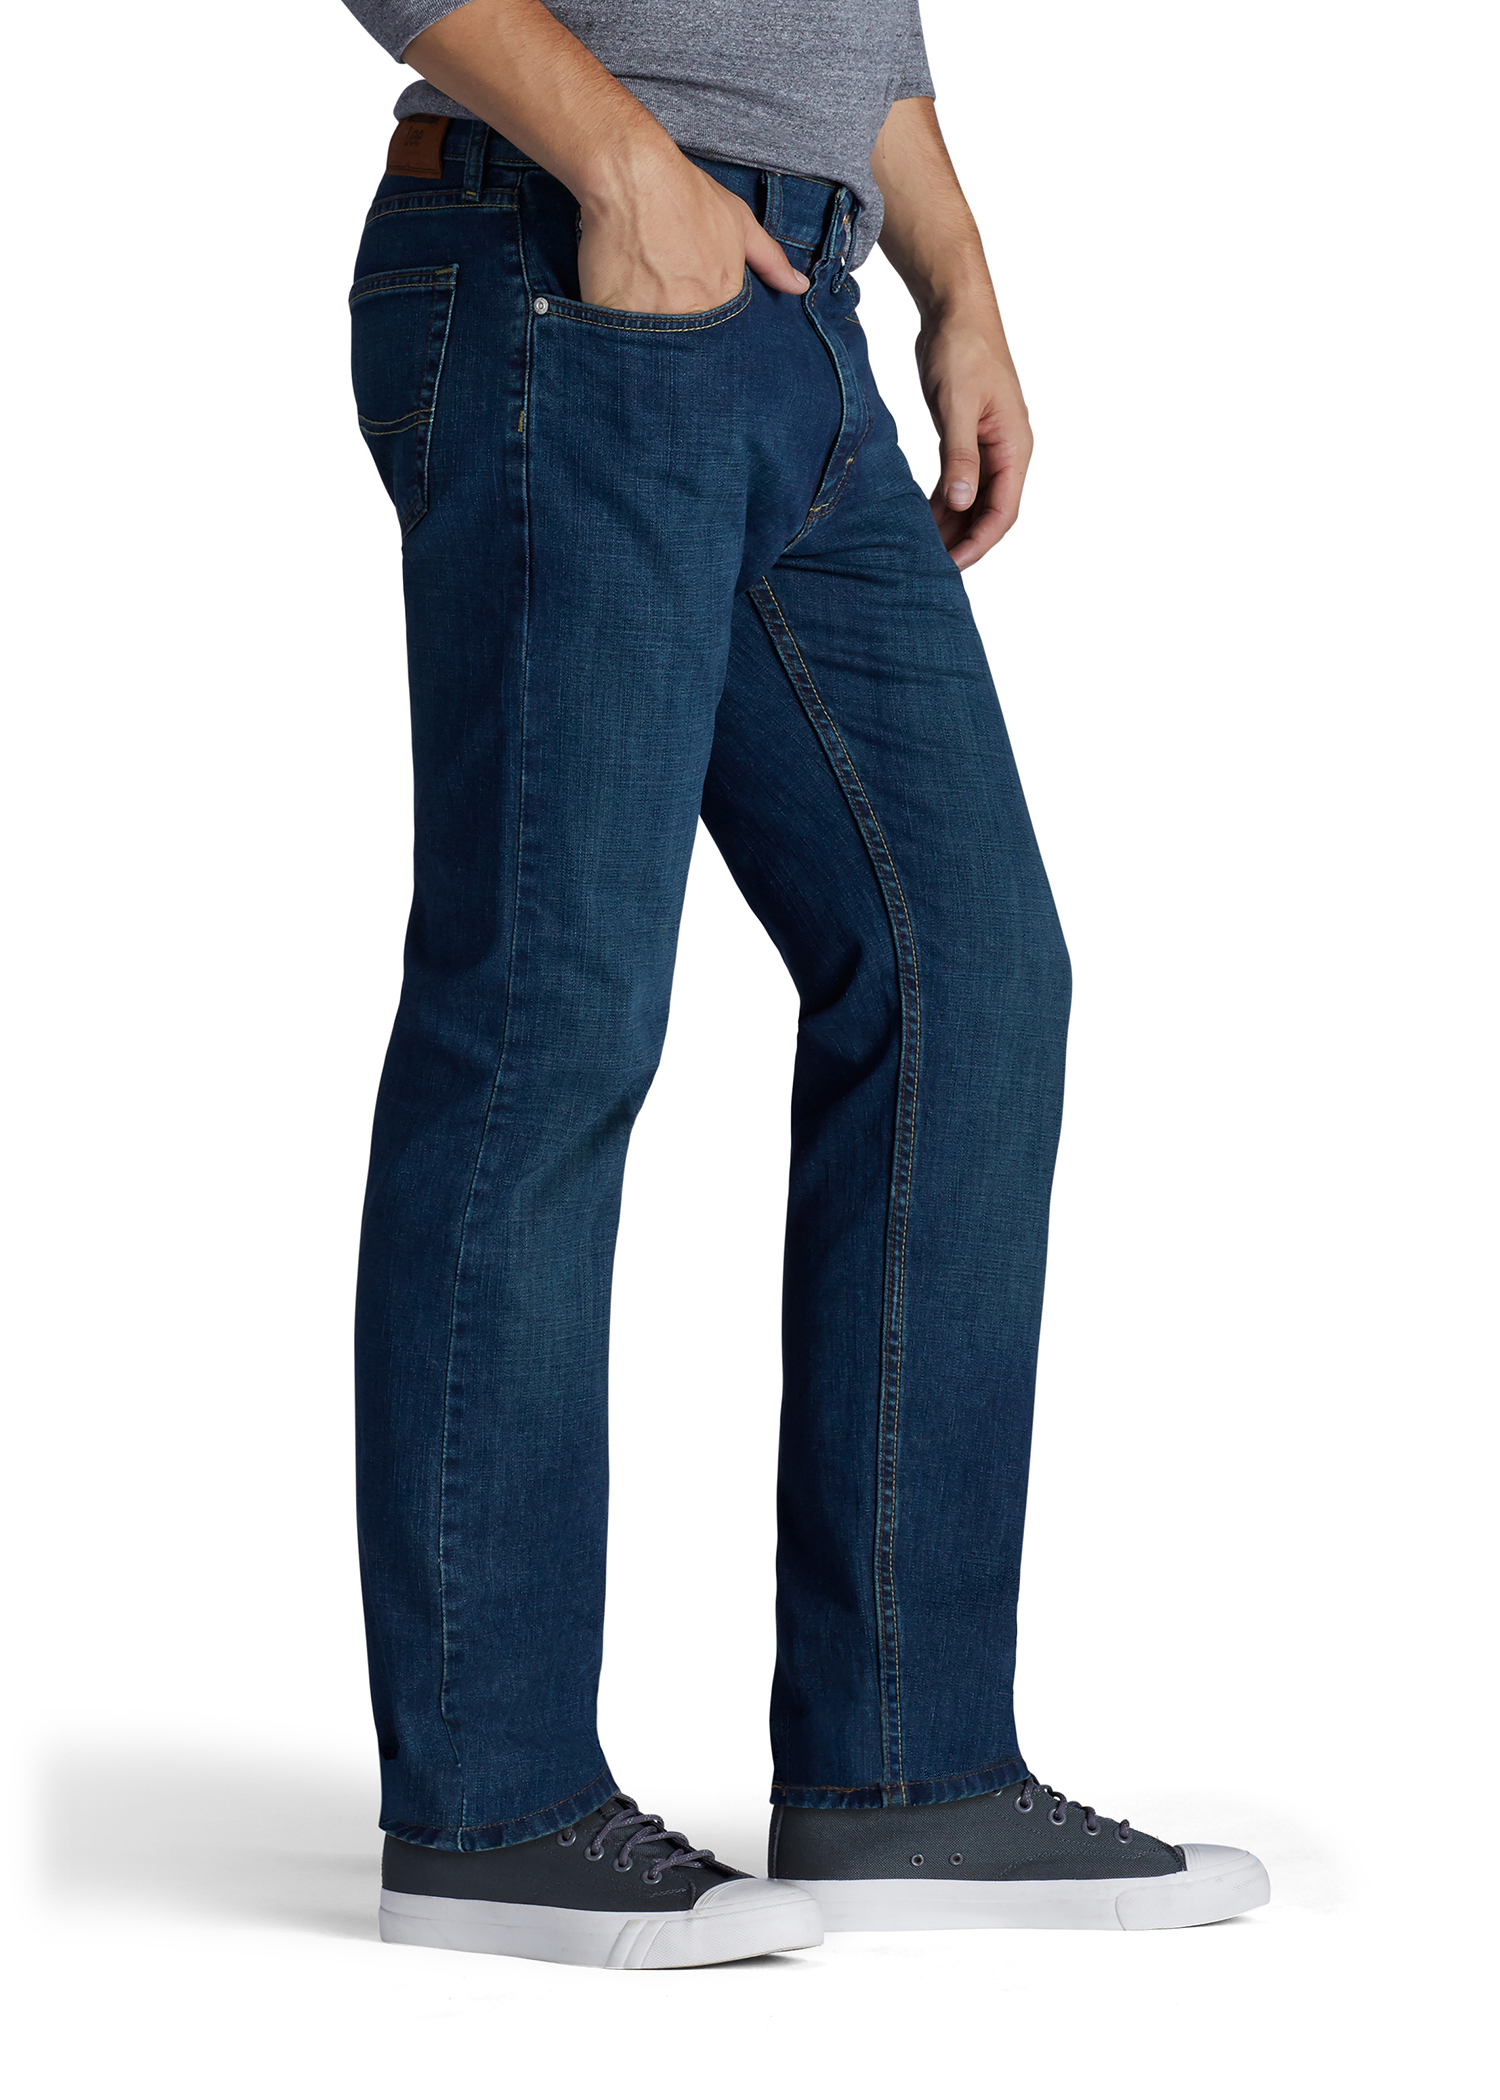 Lee Men's Premium Select Classic Fit Jeans - image 3 of 4